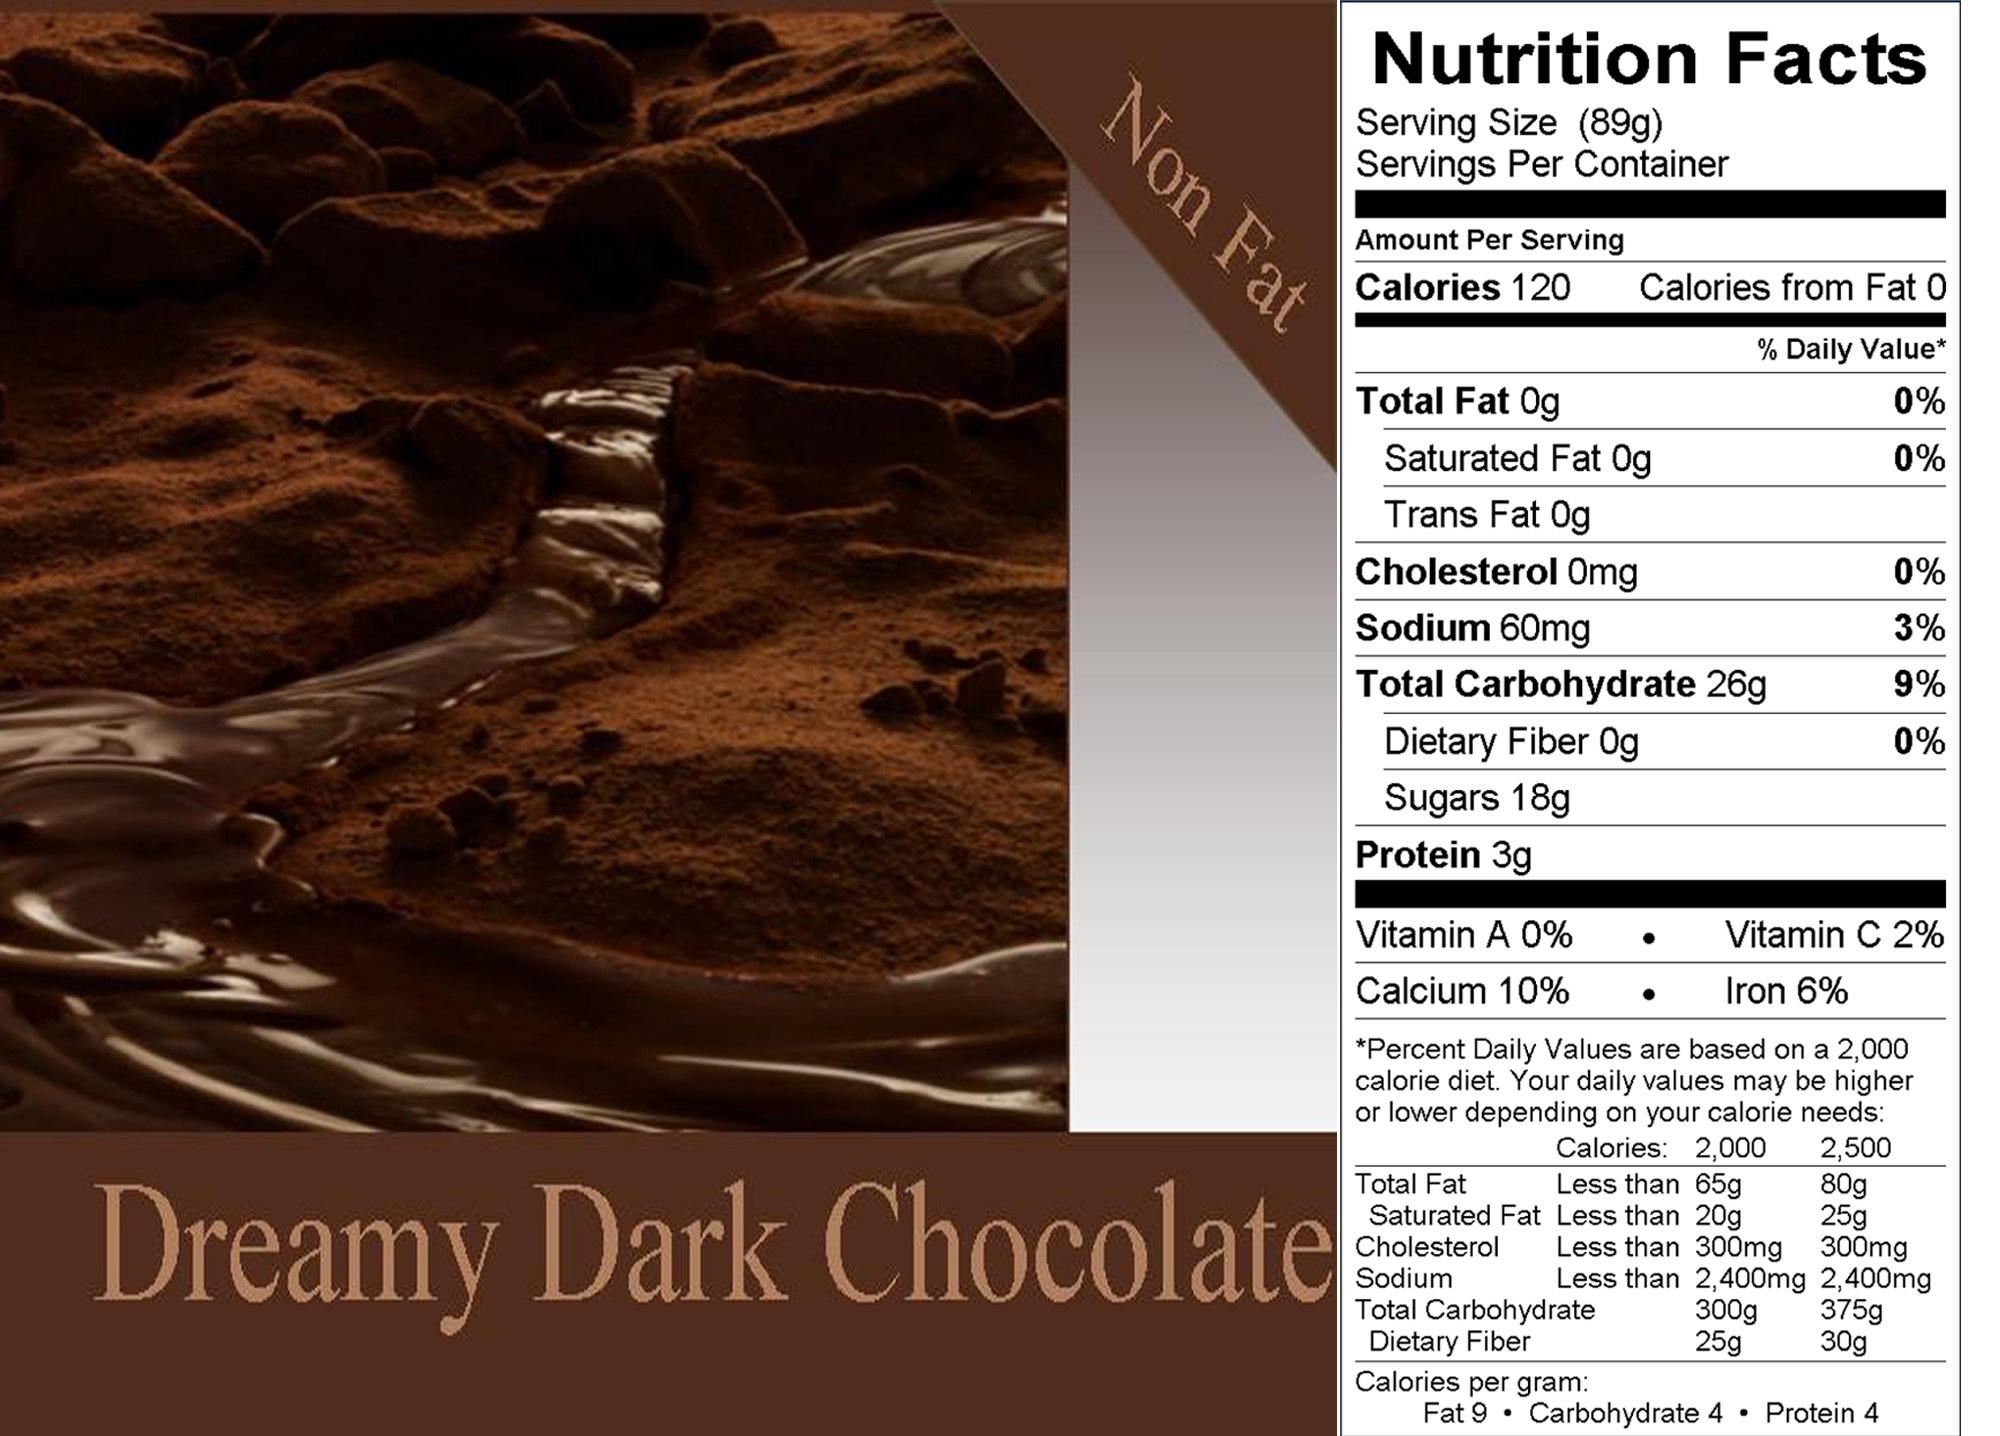 Dreamy Dark Chocolate